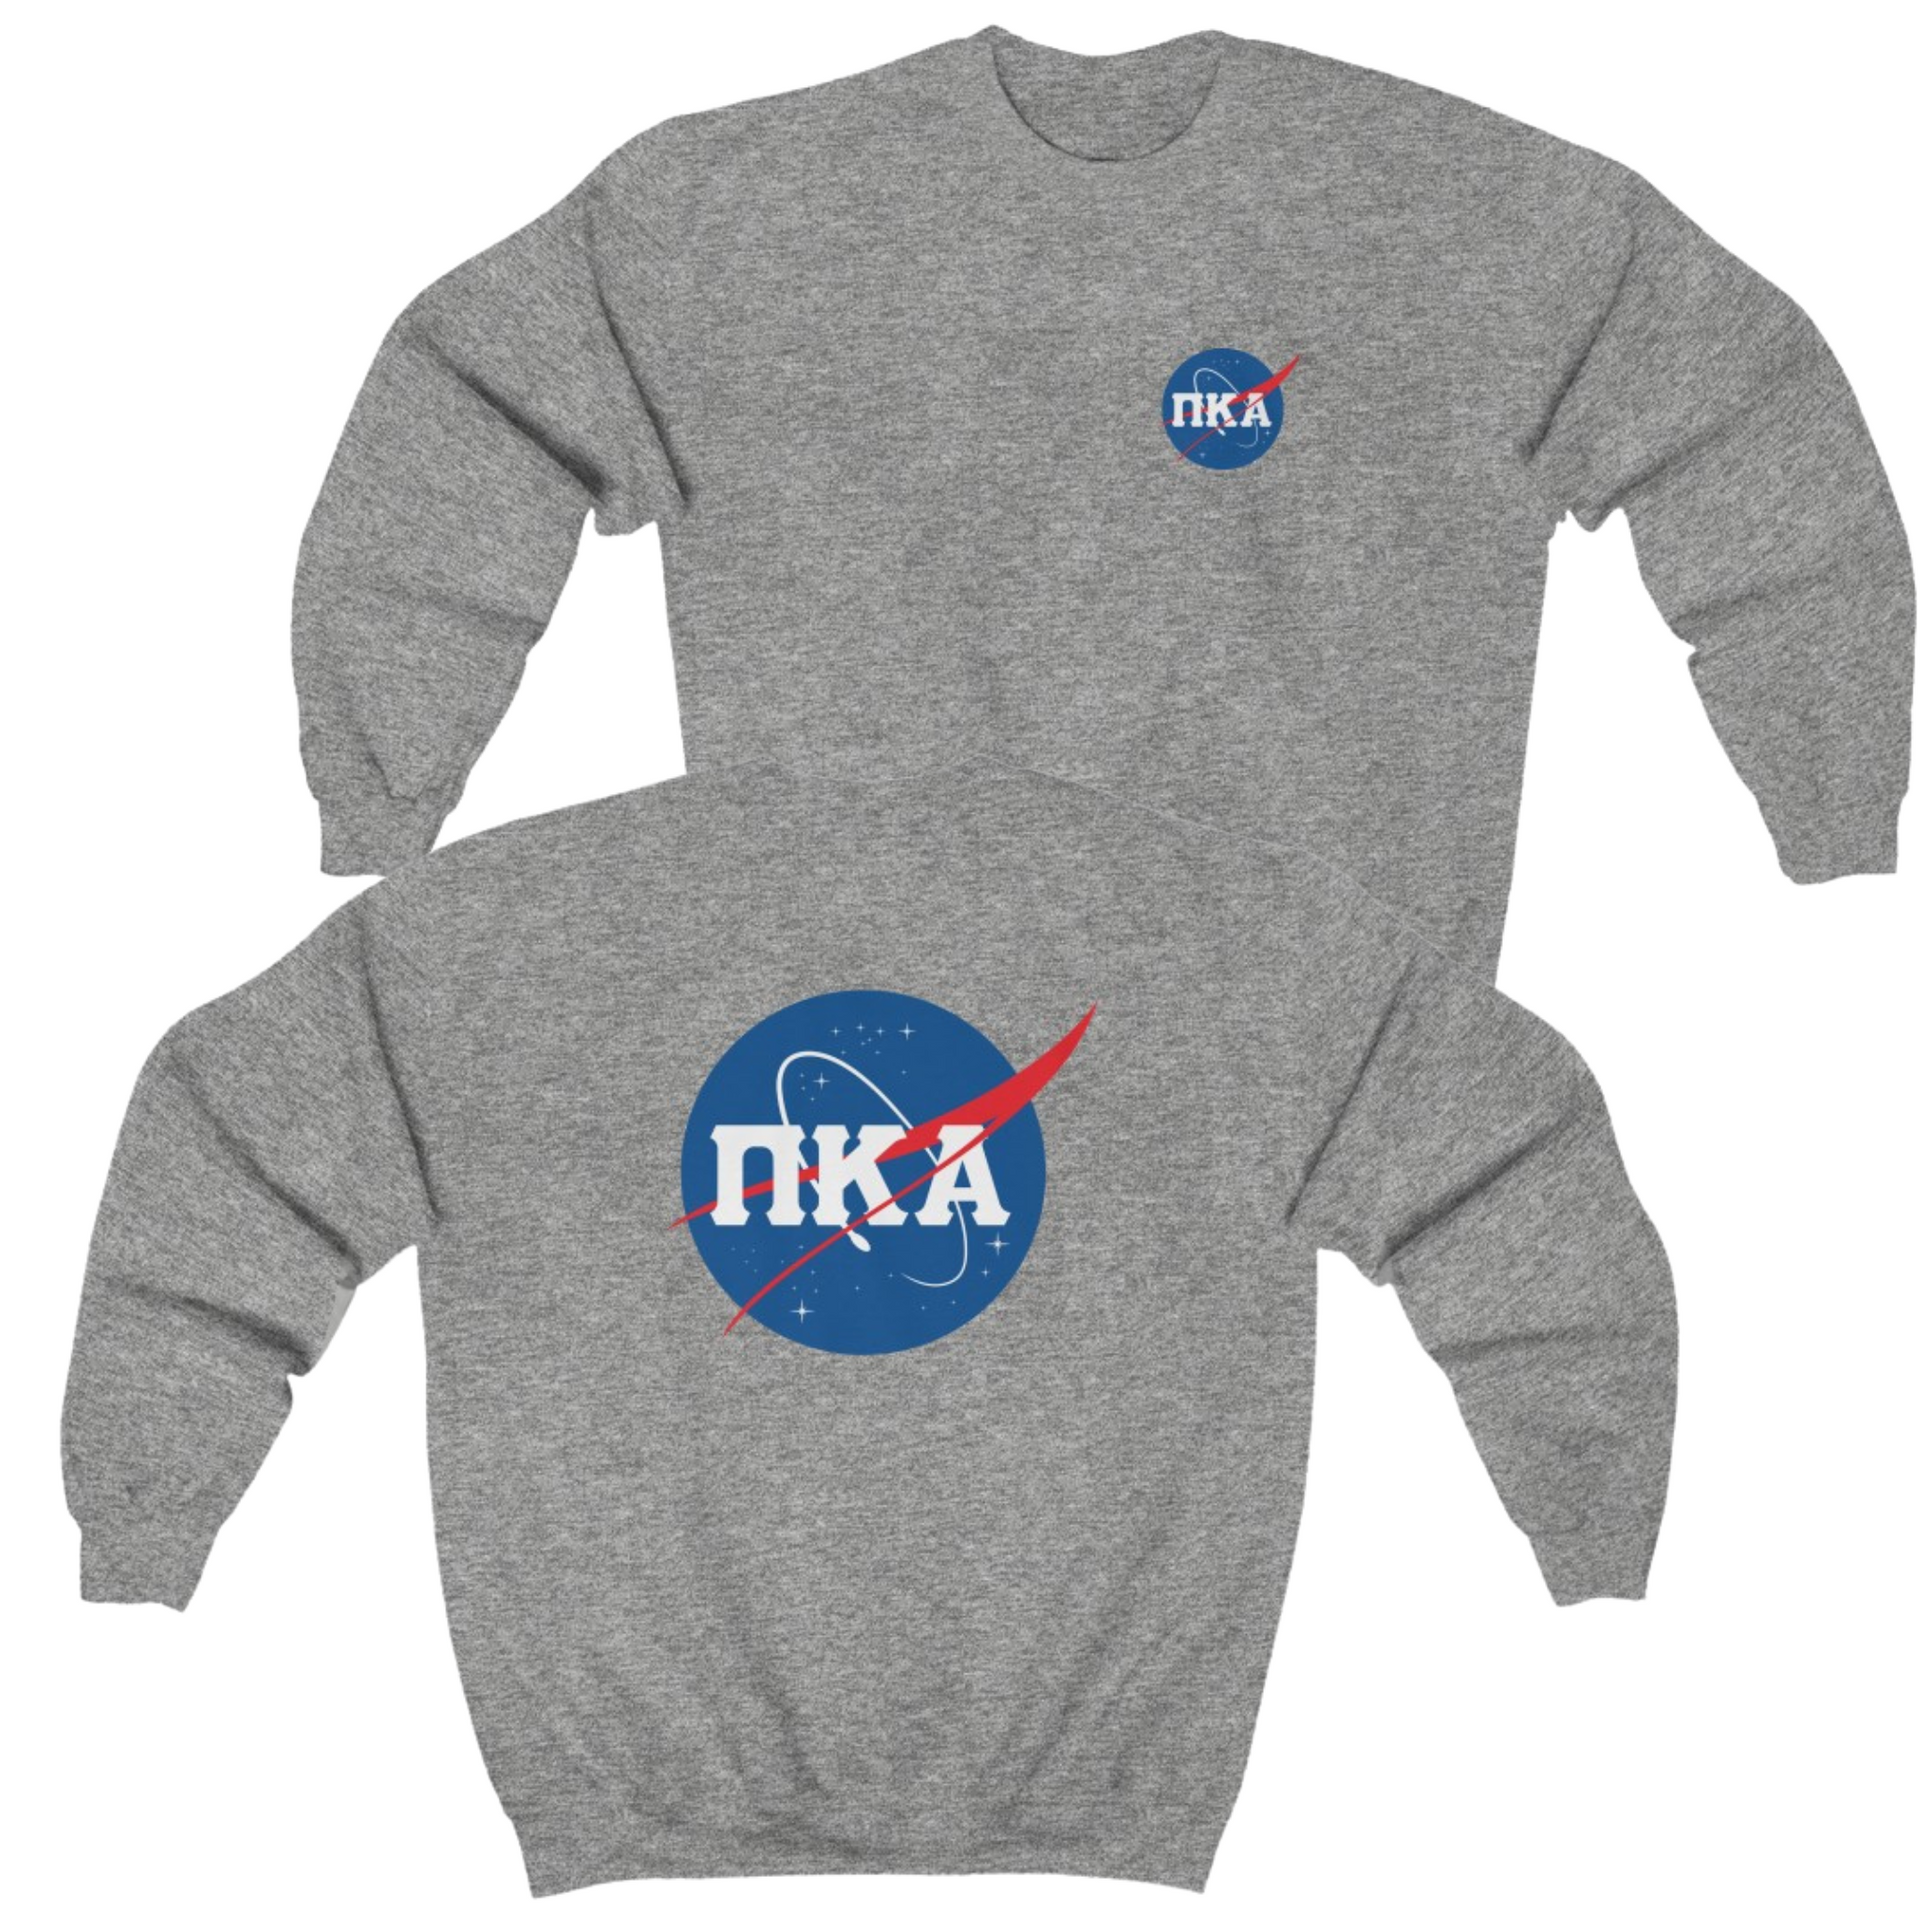 Grey Pi Kappa Alpha Graphic Crewneck Sweatshirt | Nasa 2.0 | Pi kappa alpha fraternity shirt 